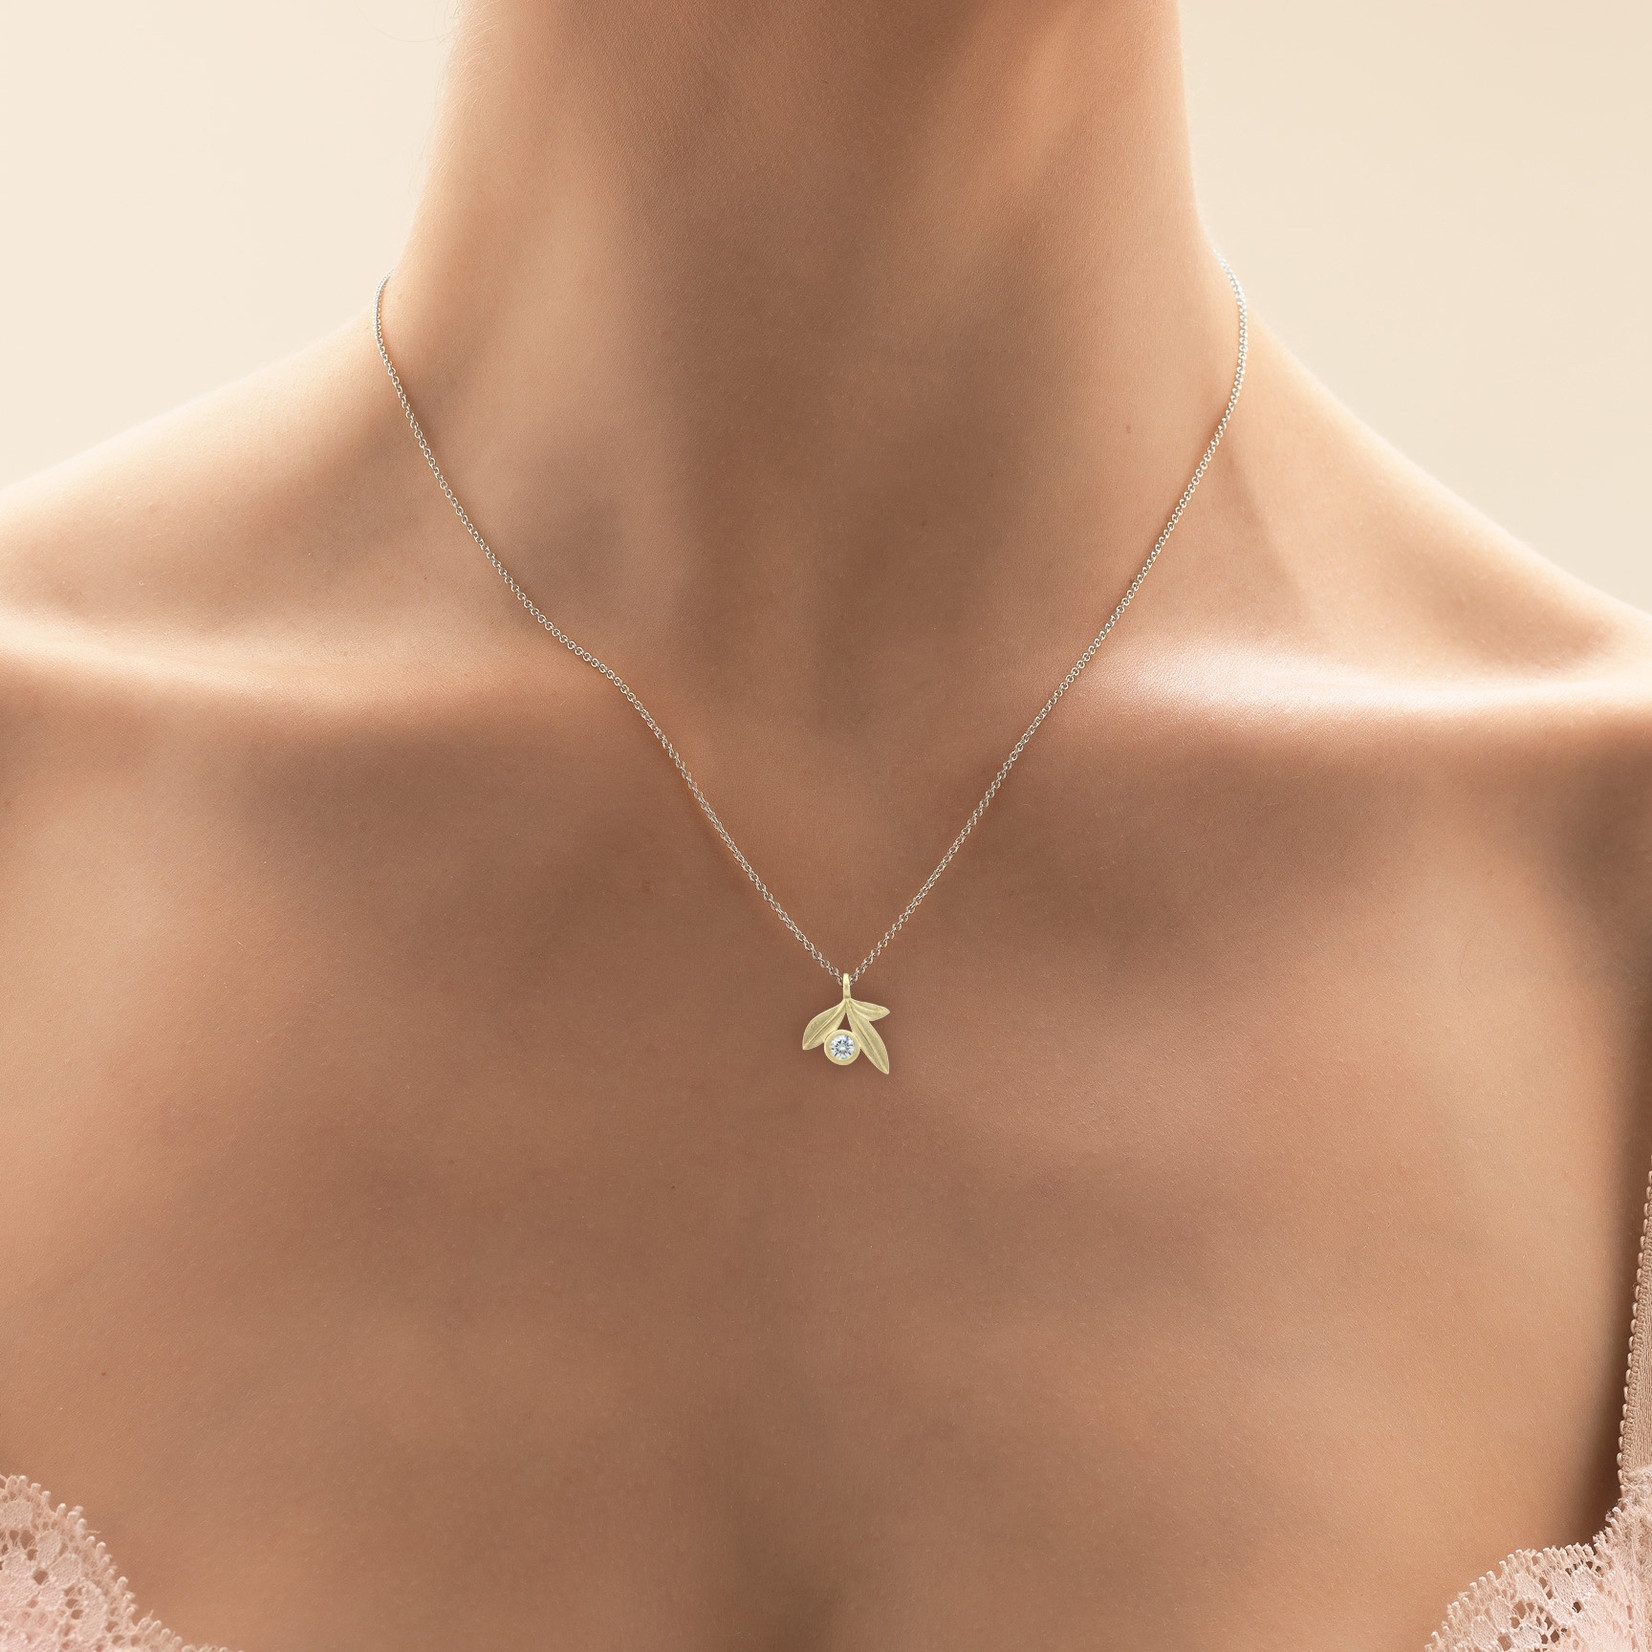 Baxter Moerman Botanica Single Stone Necklace with Diamond